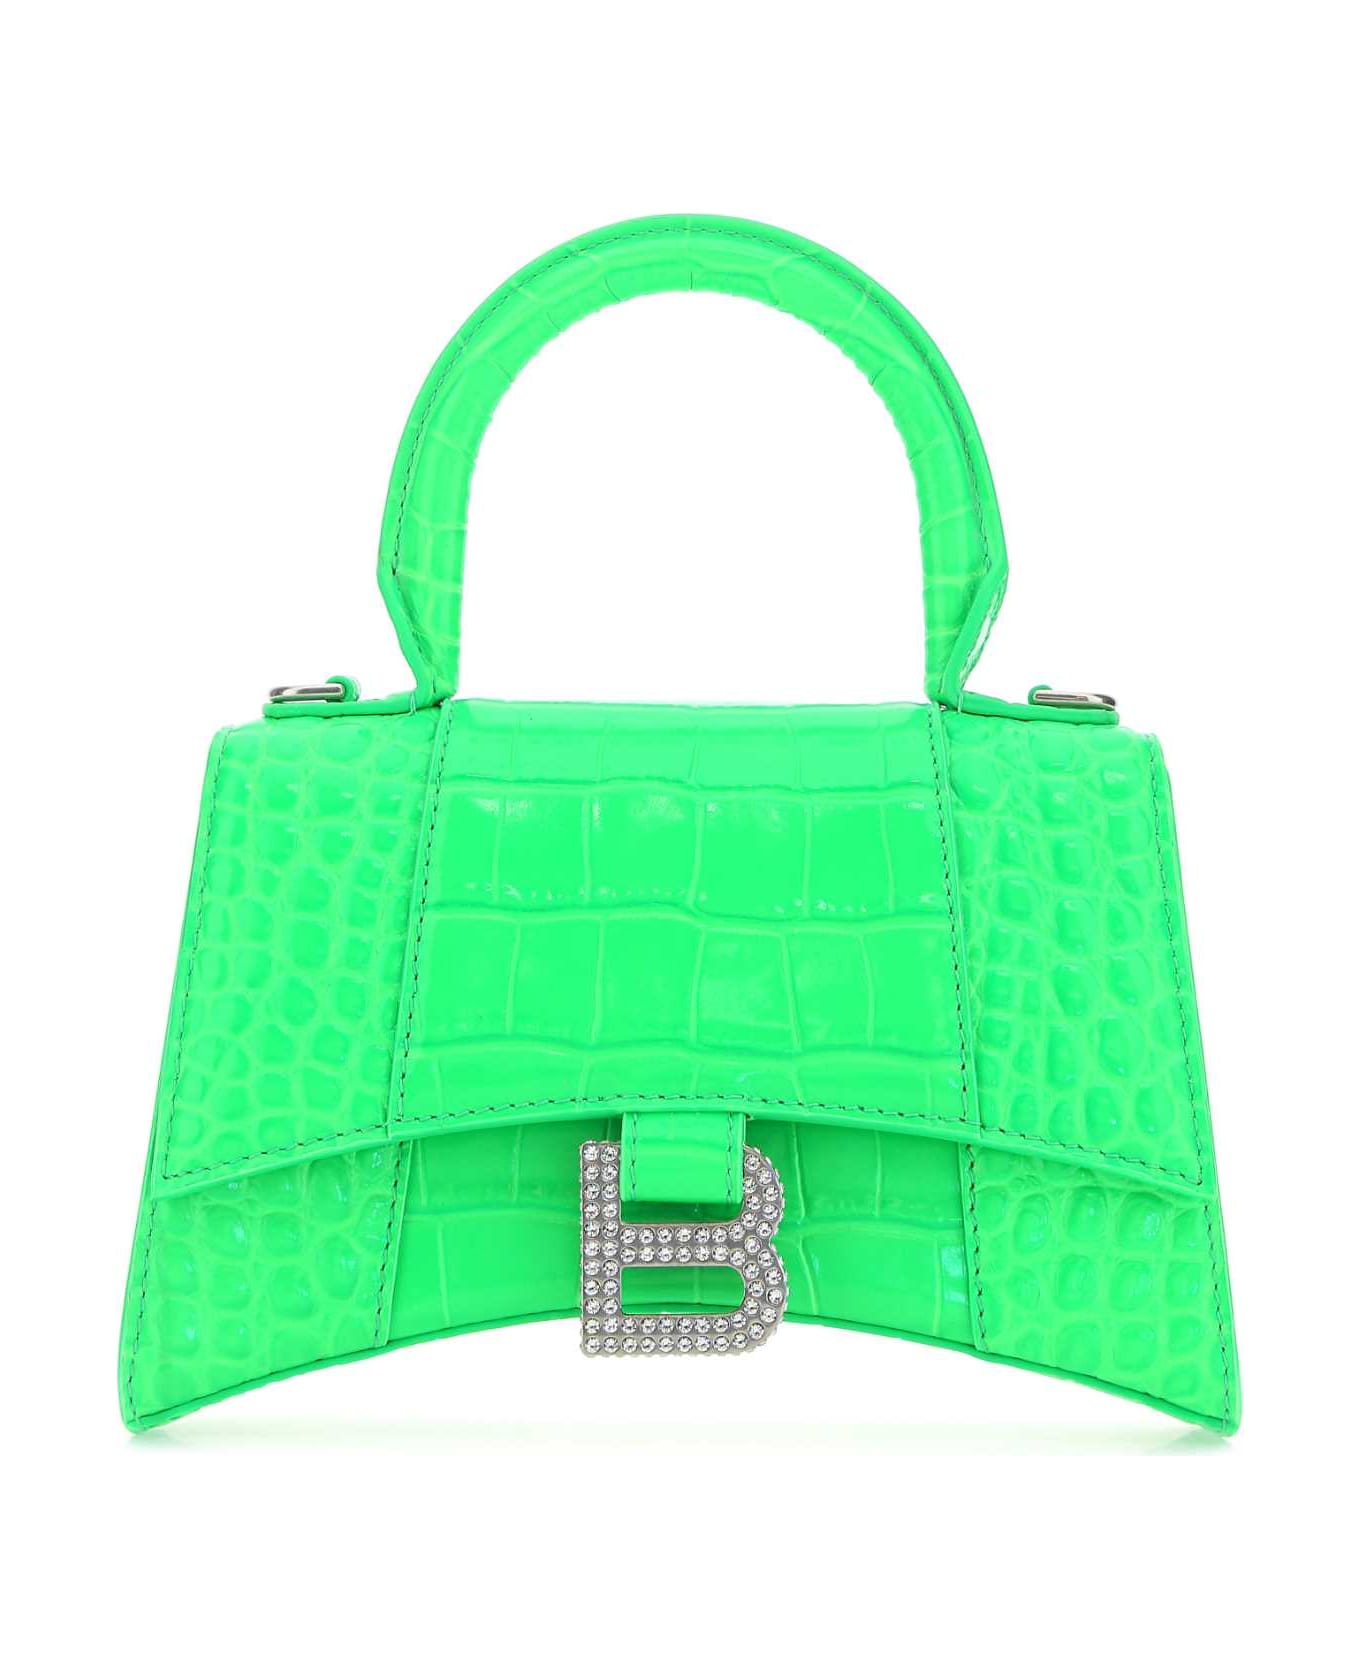 Balenciaga Fluo Green Leather Hourglass Xs Handbag - 3810